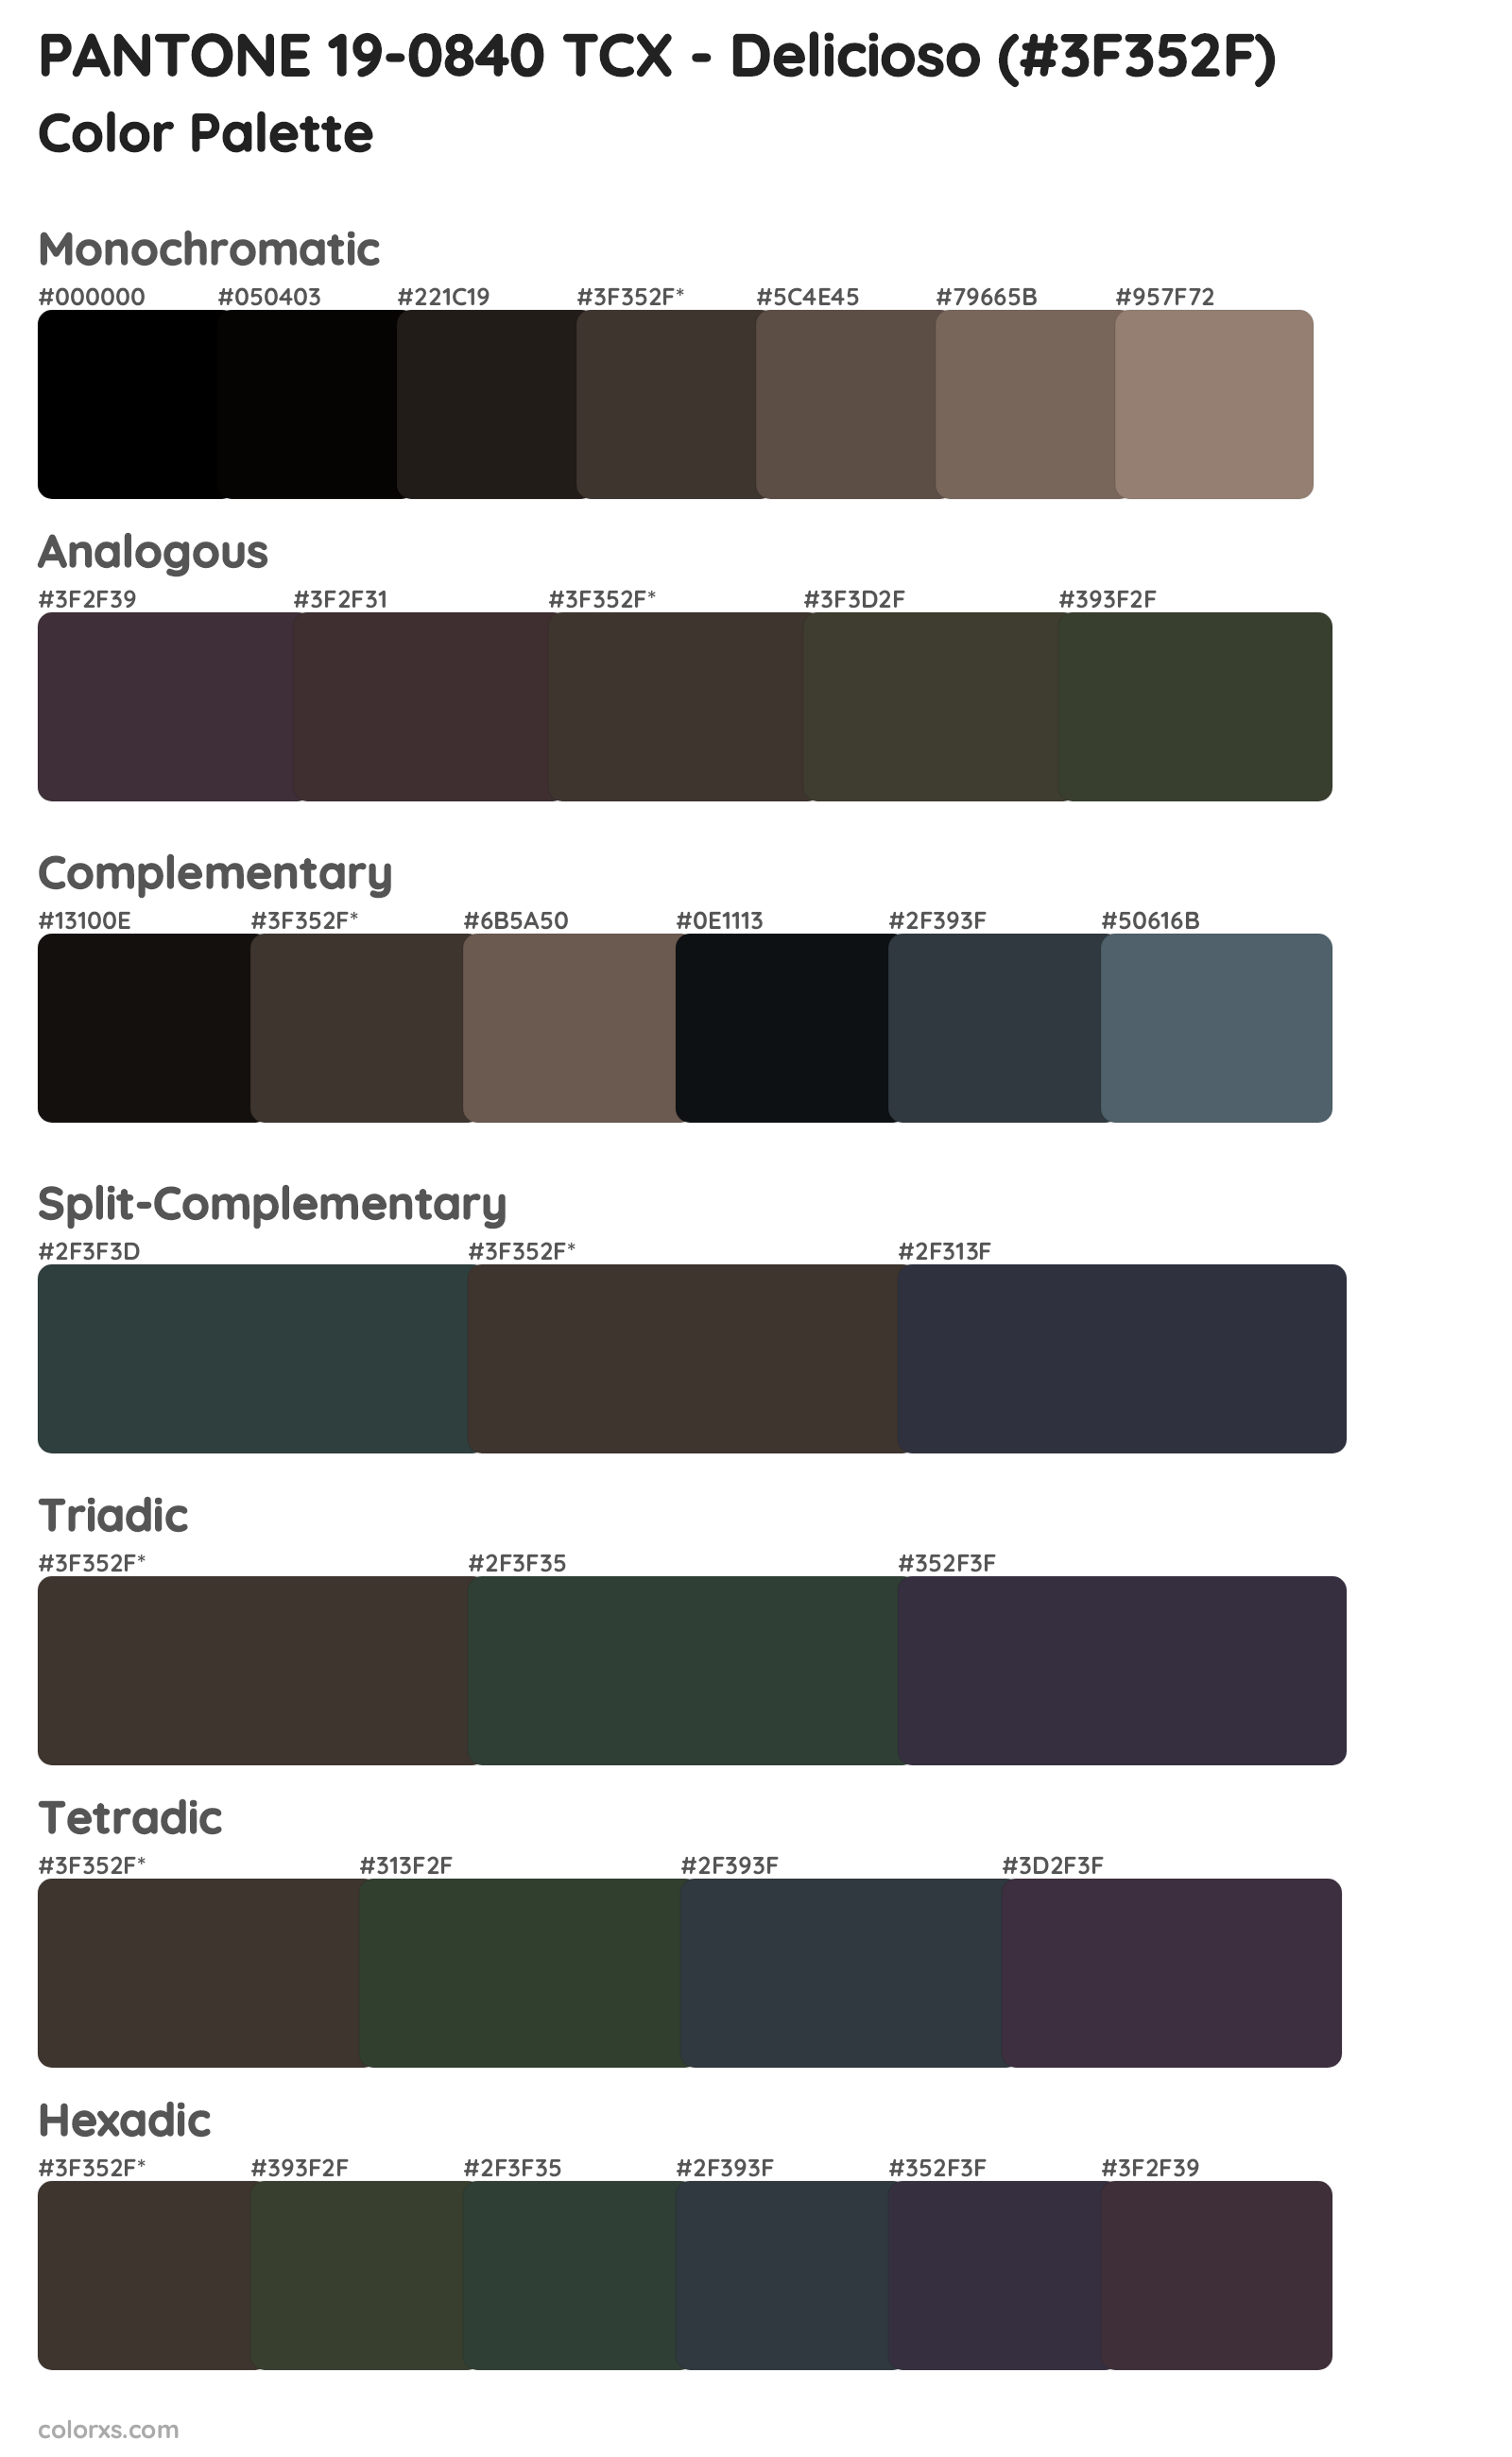 PANTONE 19-0840 TCX - Delicioso Color Scheme Palettes